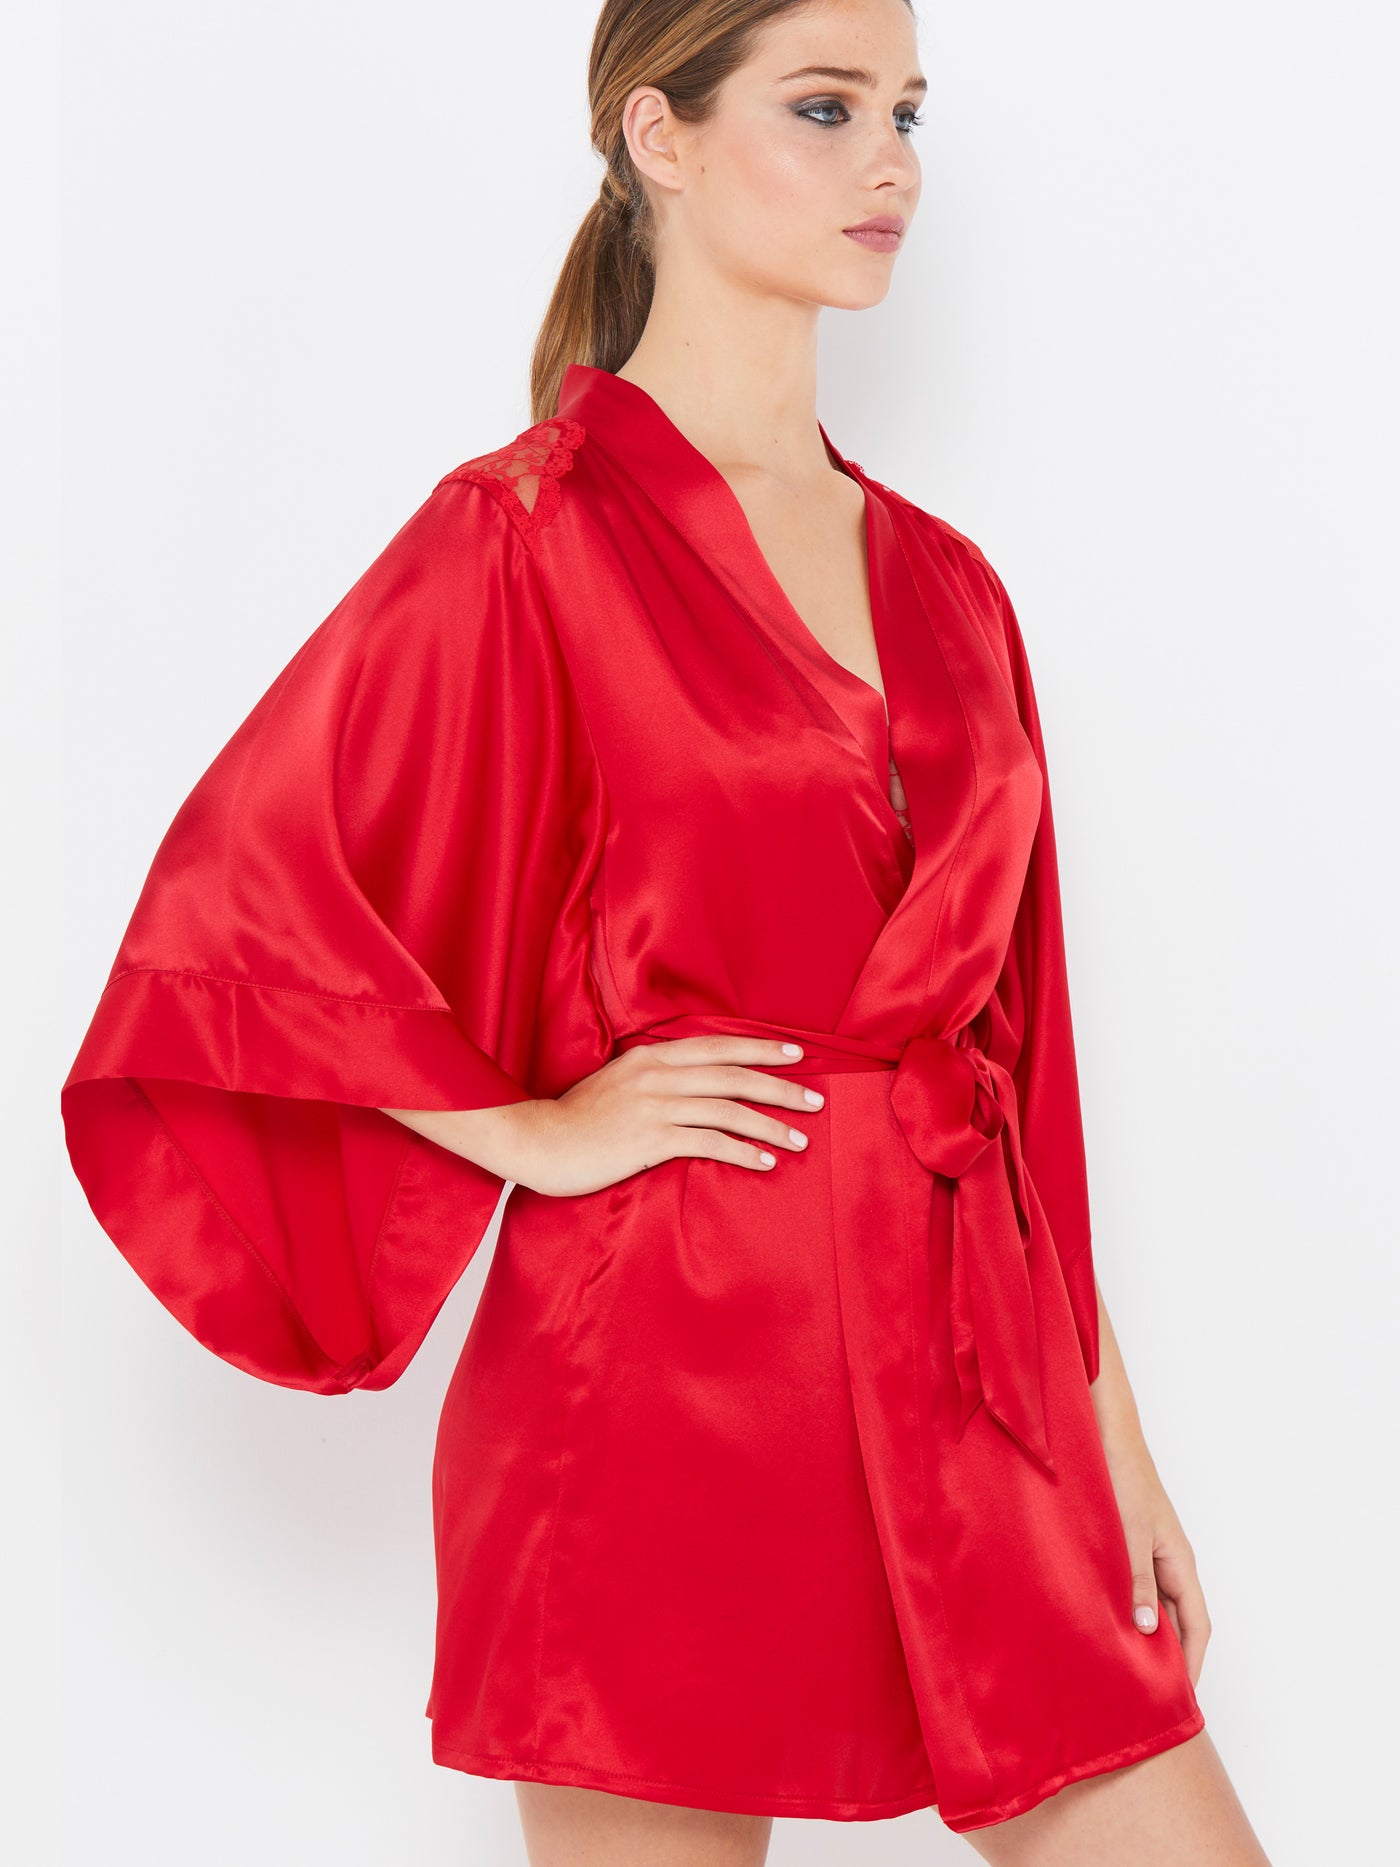 Sophia red silk robe side view